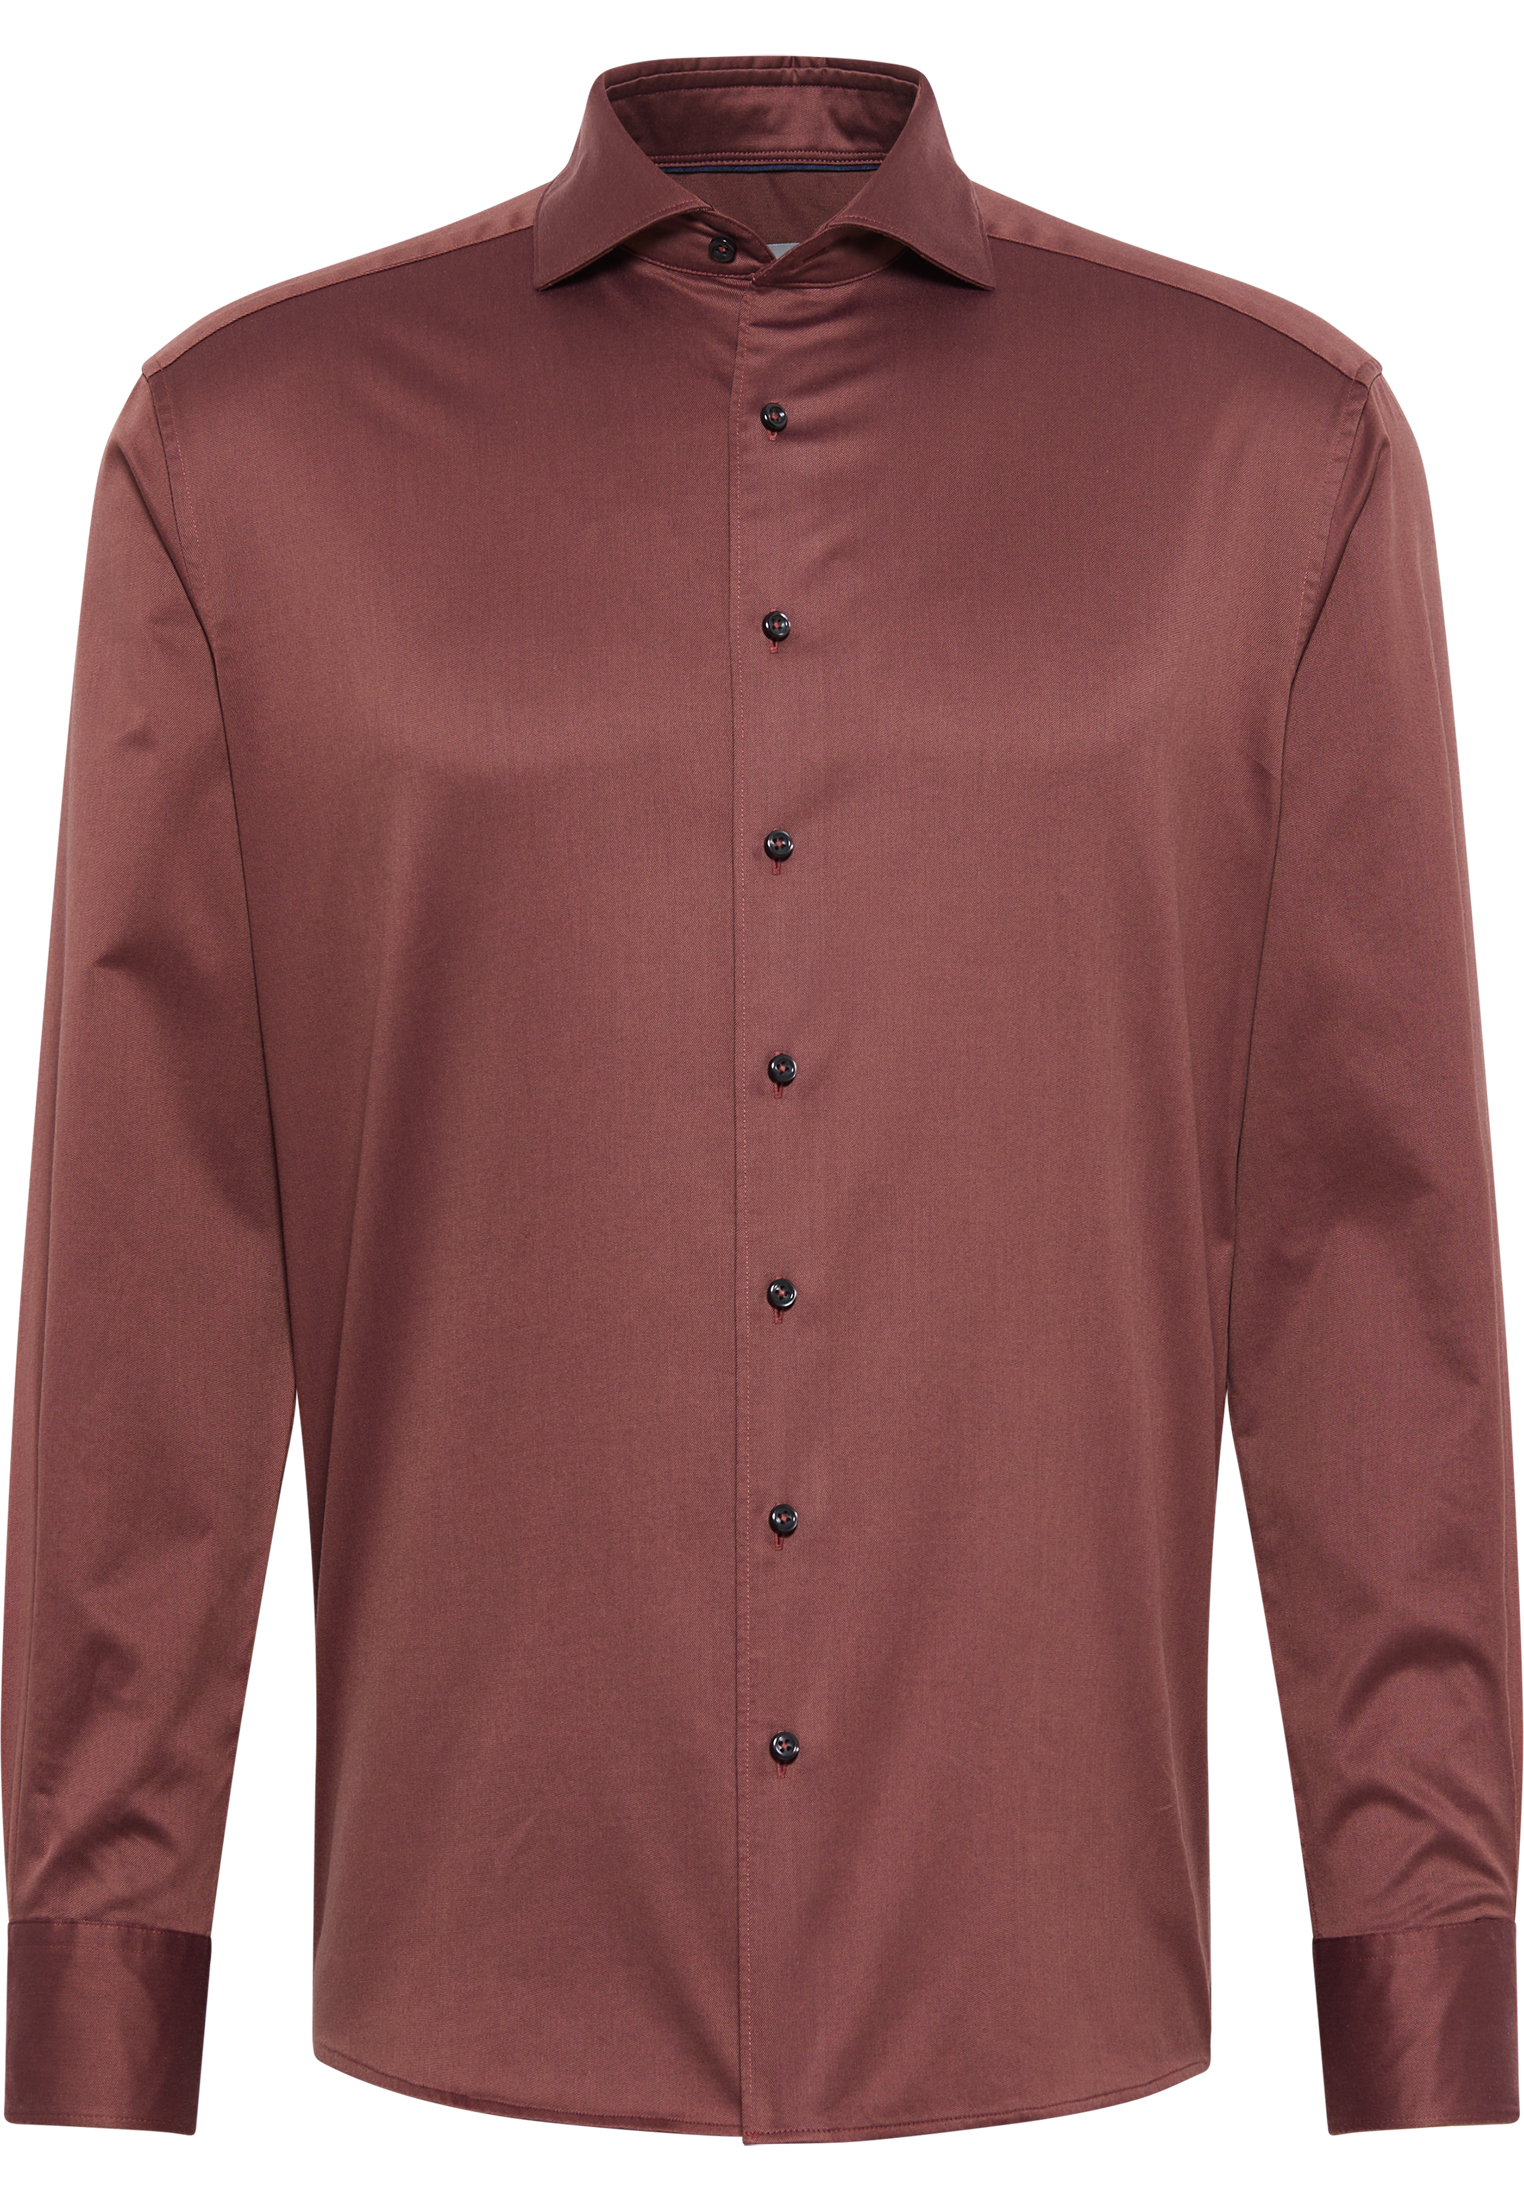 MODERN FIT Soft Luxury Shirt in aubergine plain